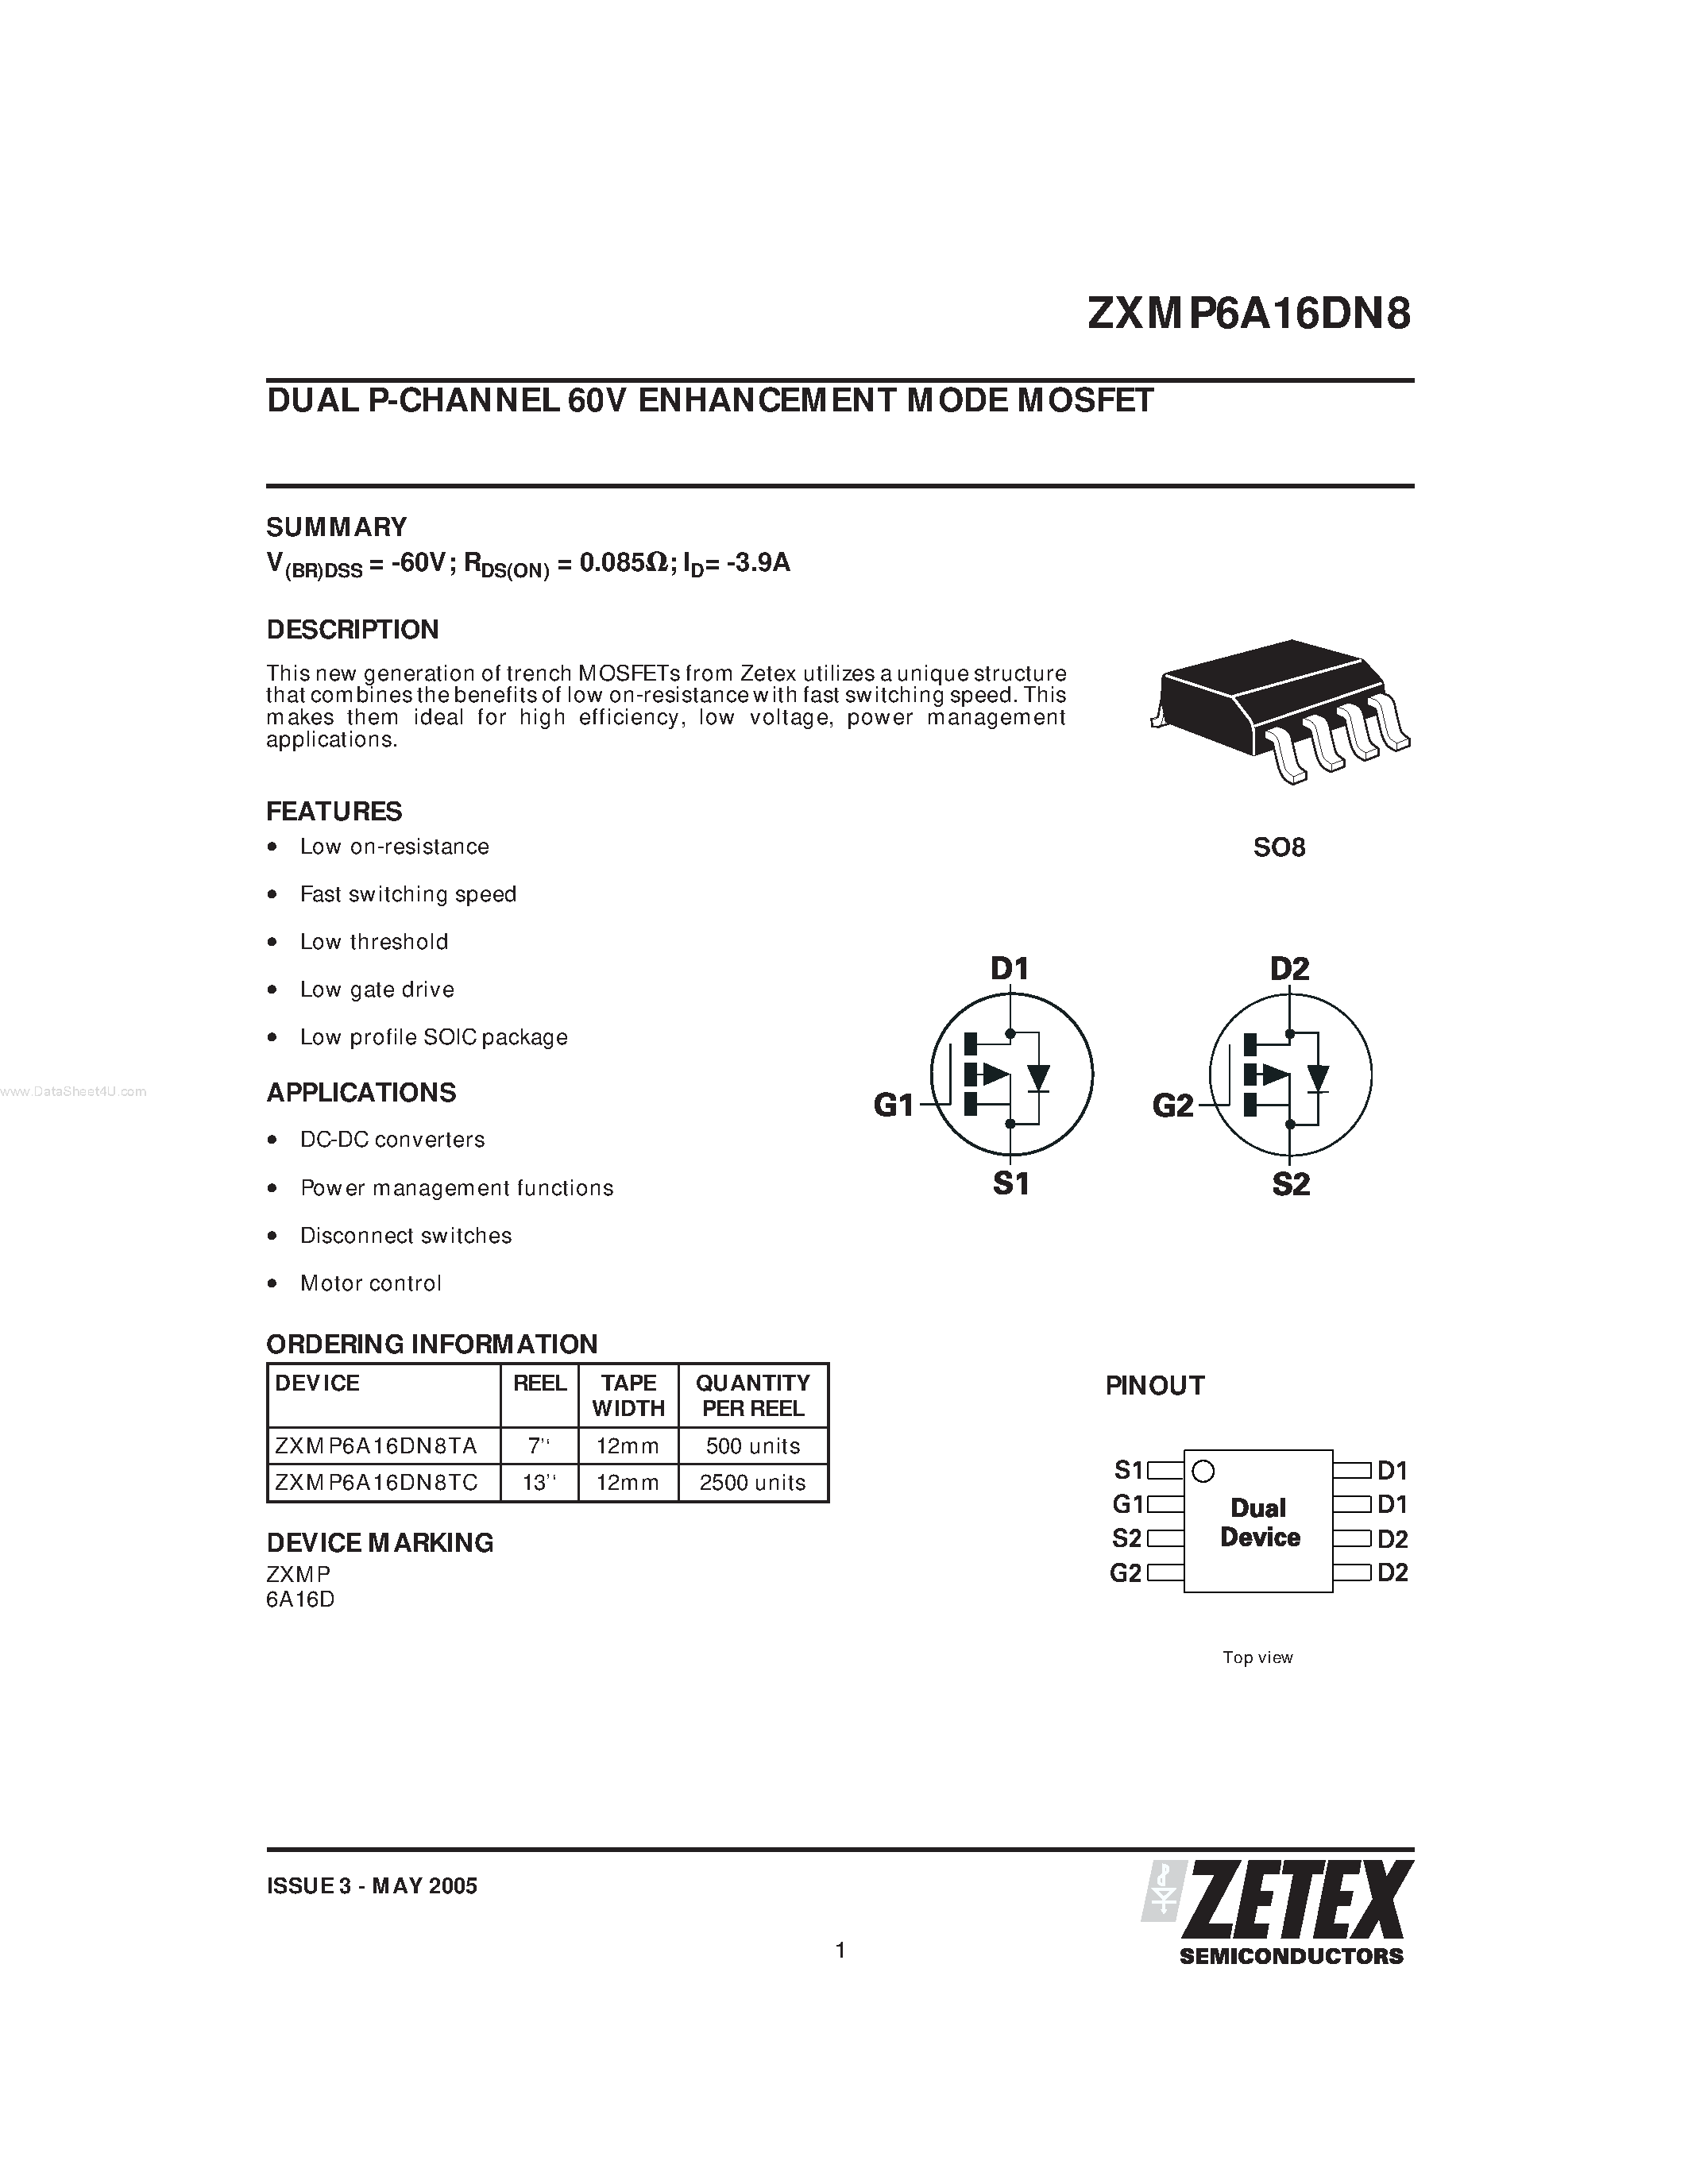 Datasheet ZXMP6A16DN8 - DUAL P-CHANNEL 60V ENHANCEMENT MODE MOSFET page 1